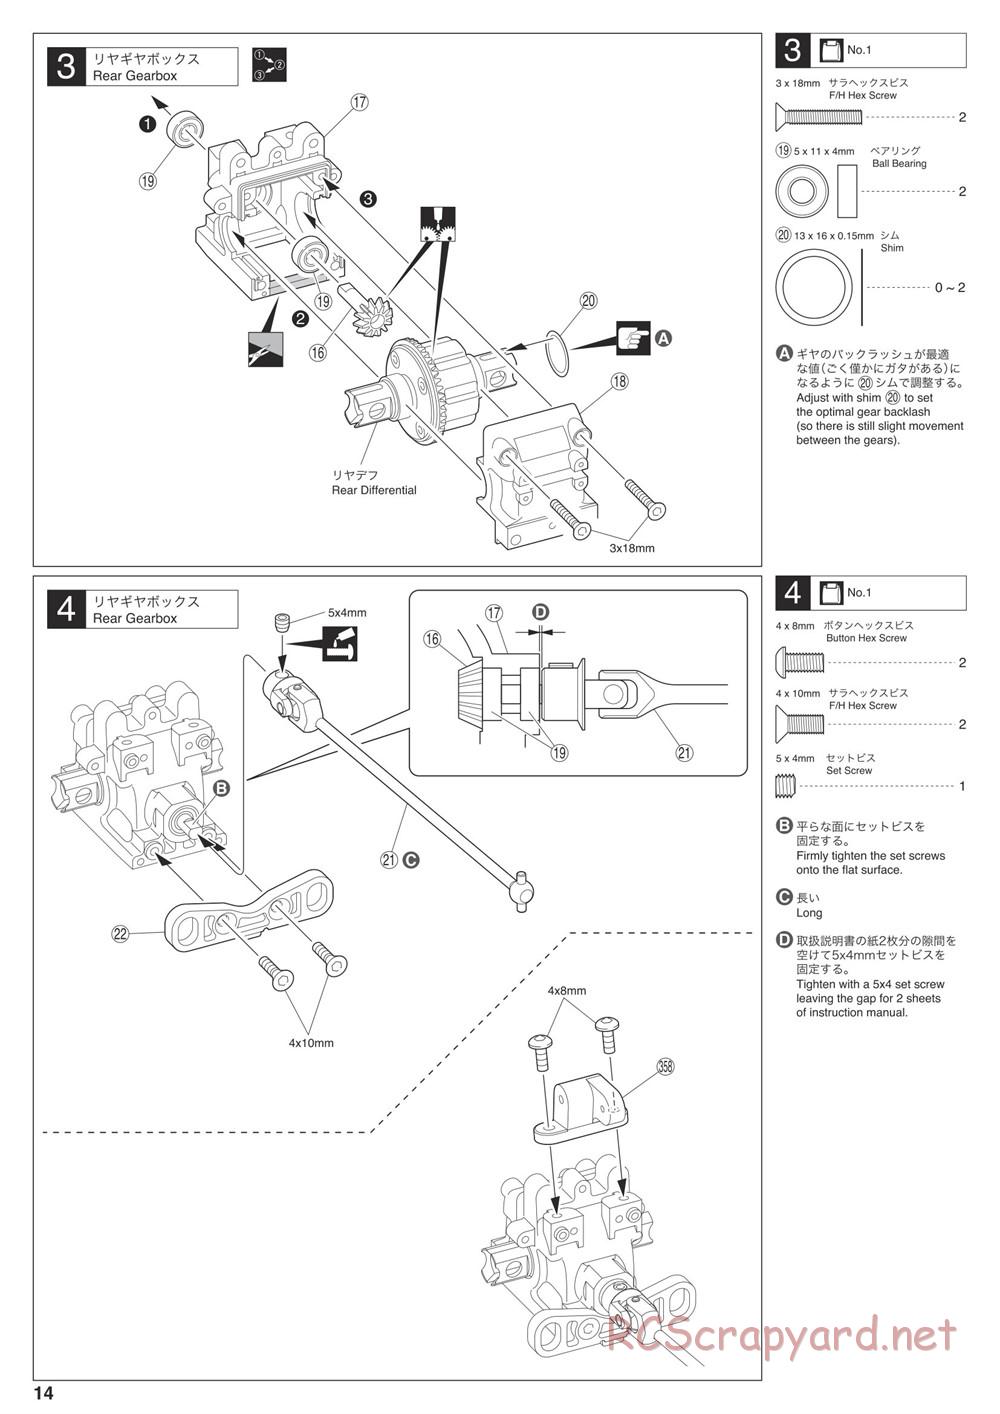 Kyosho - Inferno MP9e Evo - Manual - Page 14